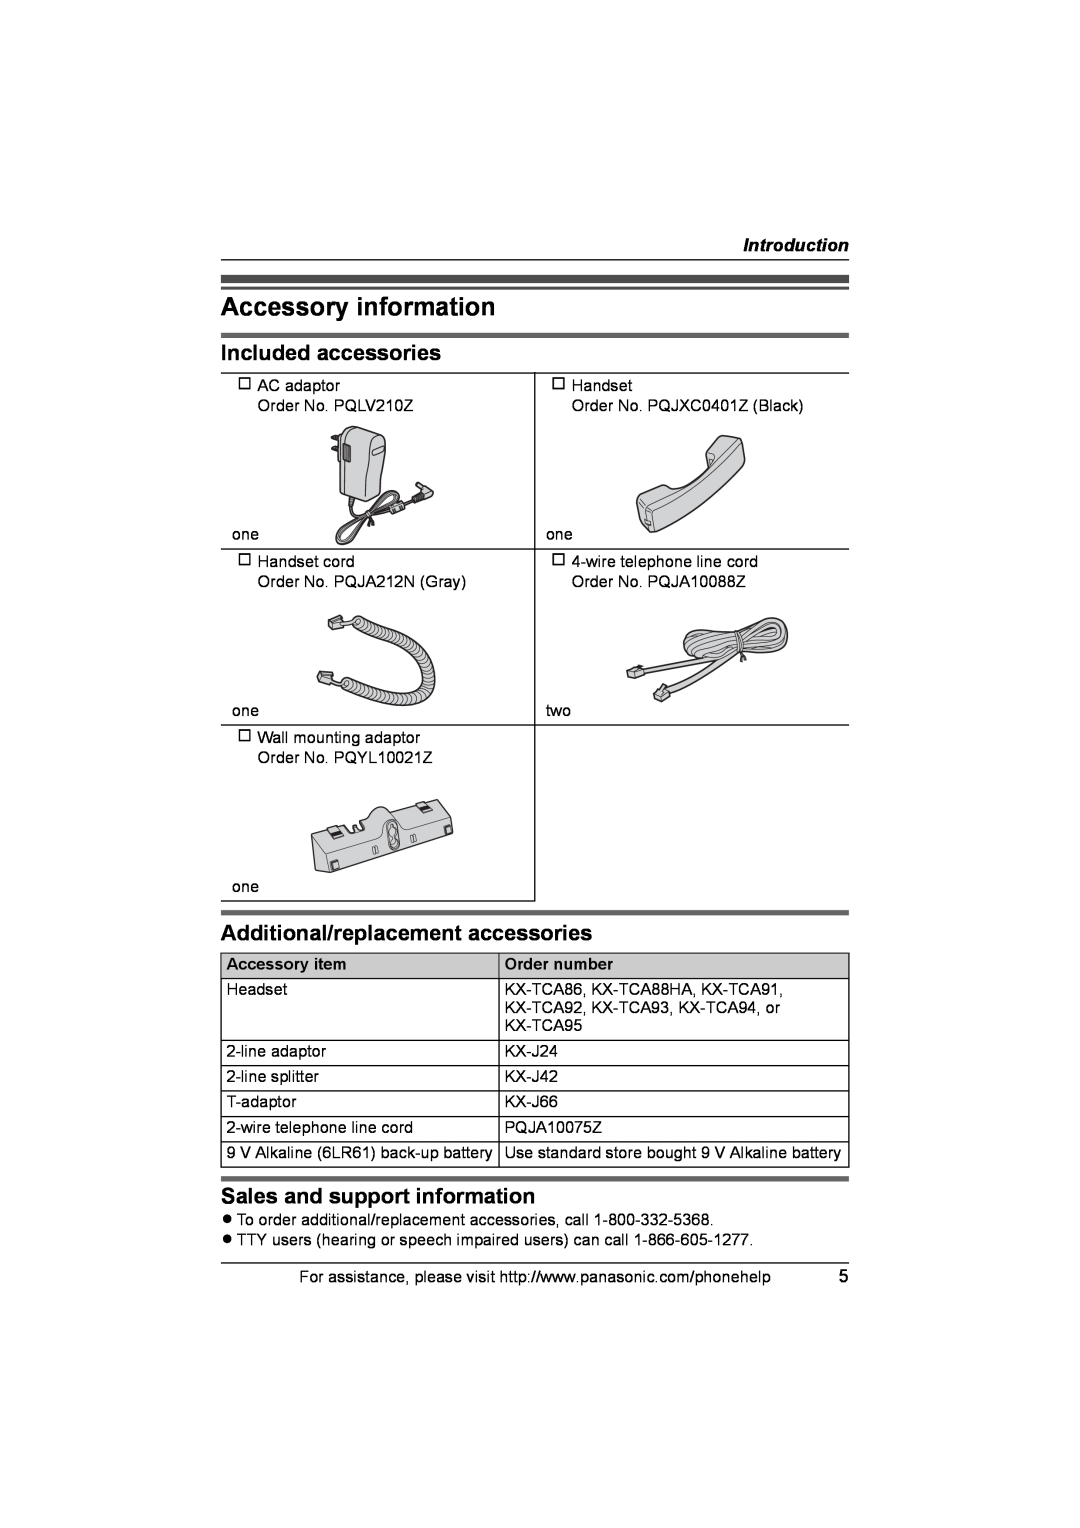 Panasonic KX-TS4100 Accessory information, Included accessories, Additional/replacement accessories, Accessory item 